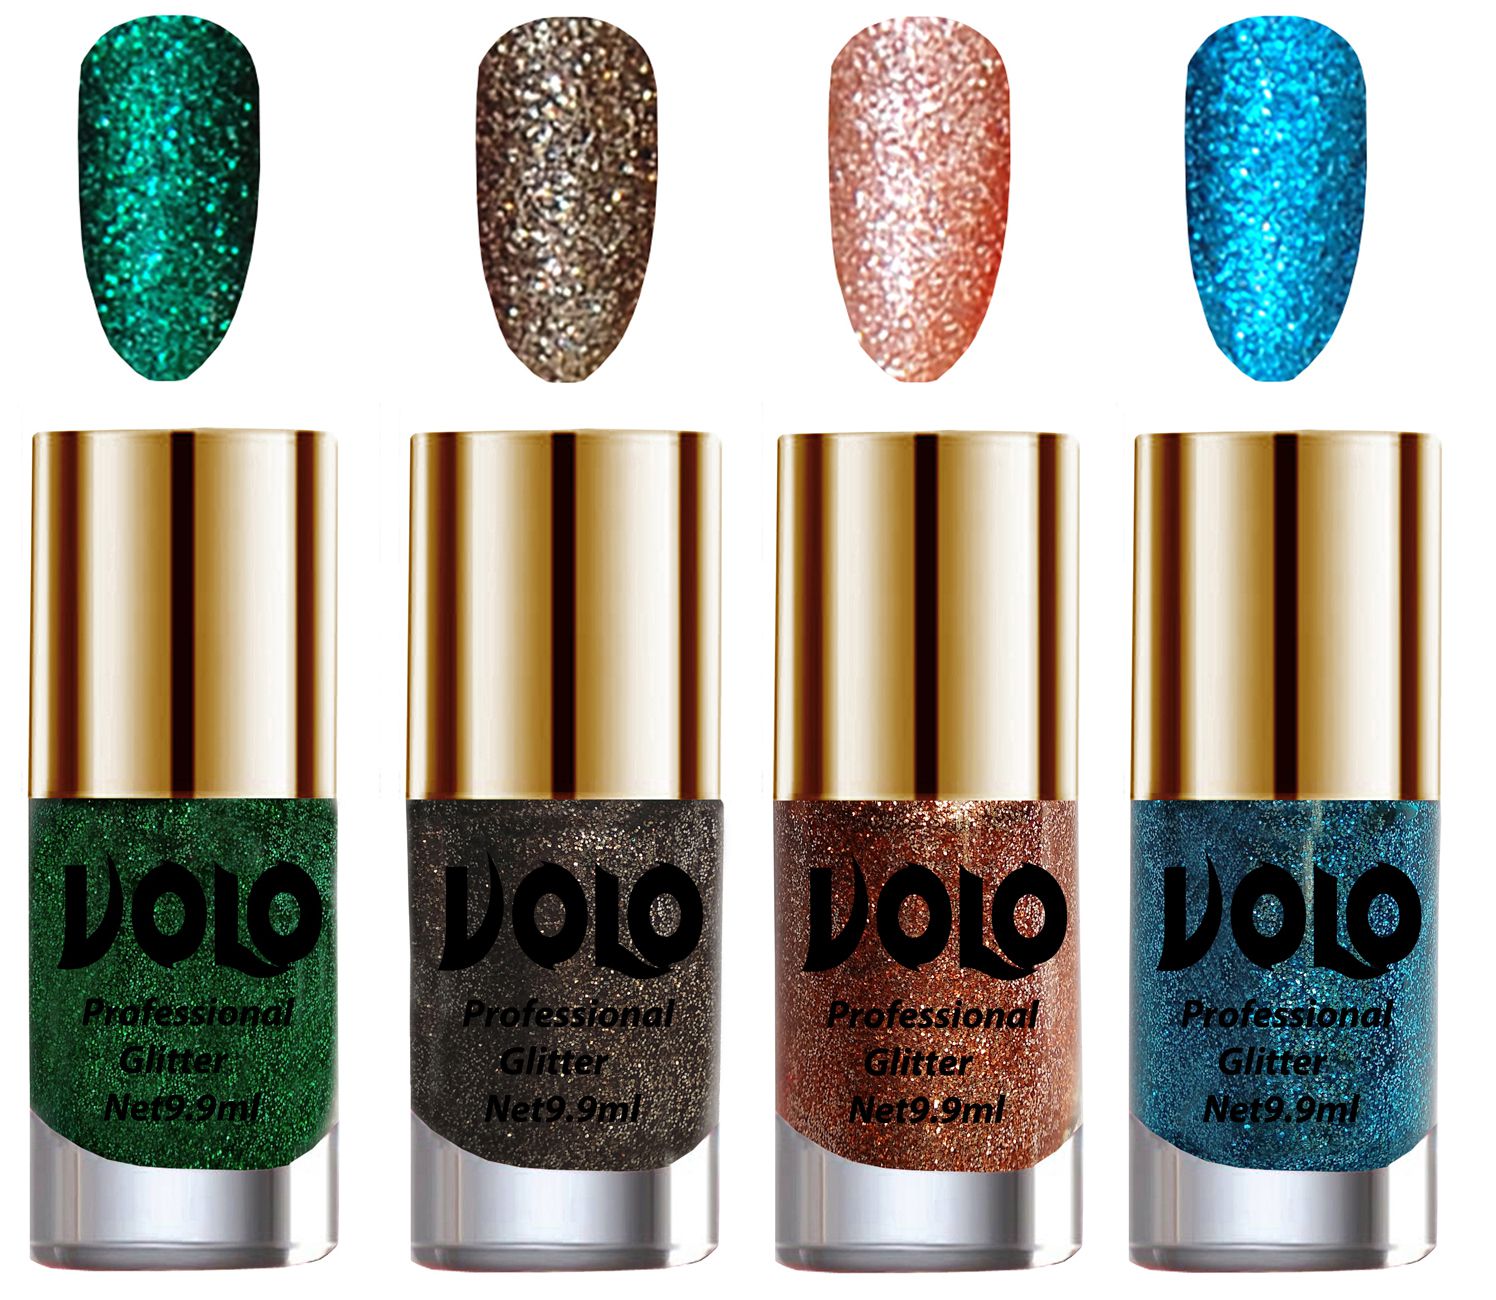     			VOLO Professionally Used Glitter Shine Nail Polish Green,Grey,Peach Blue Pack of 4 39 mL